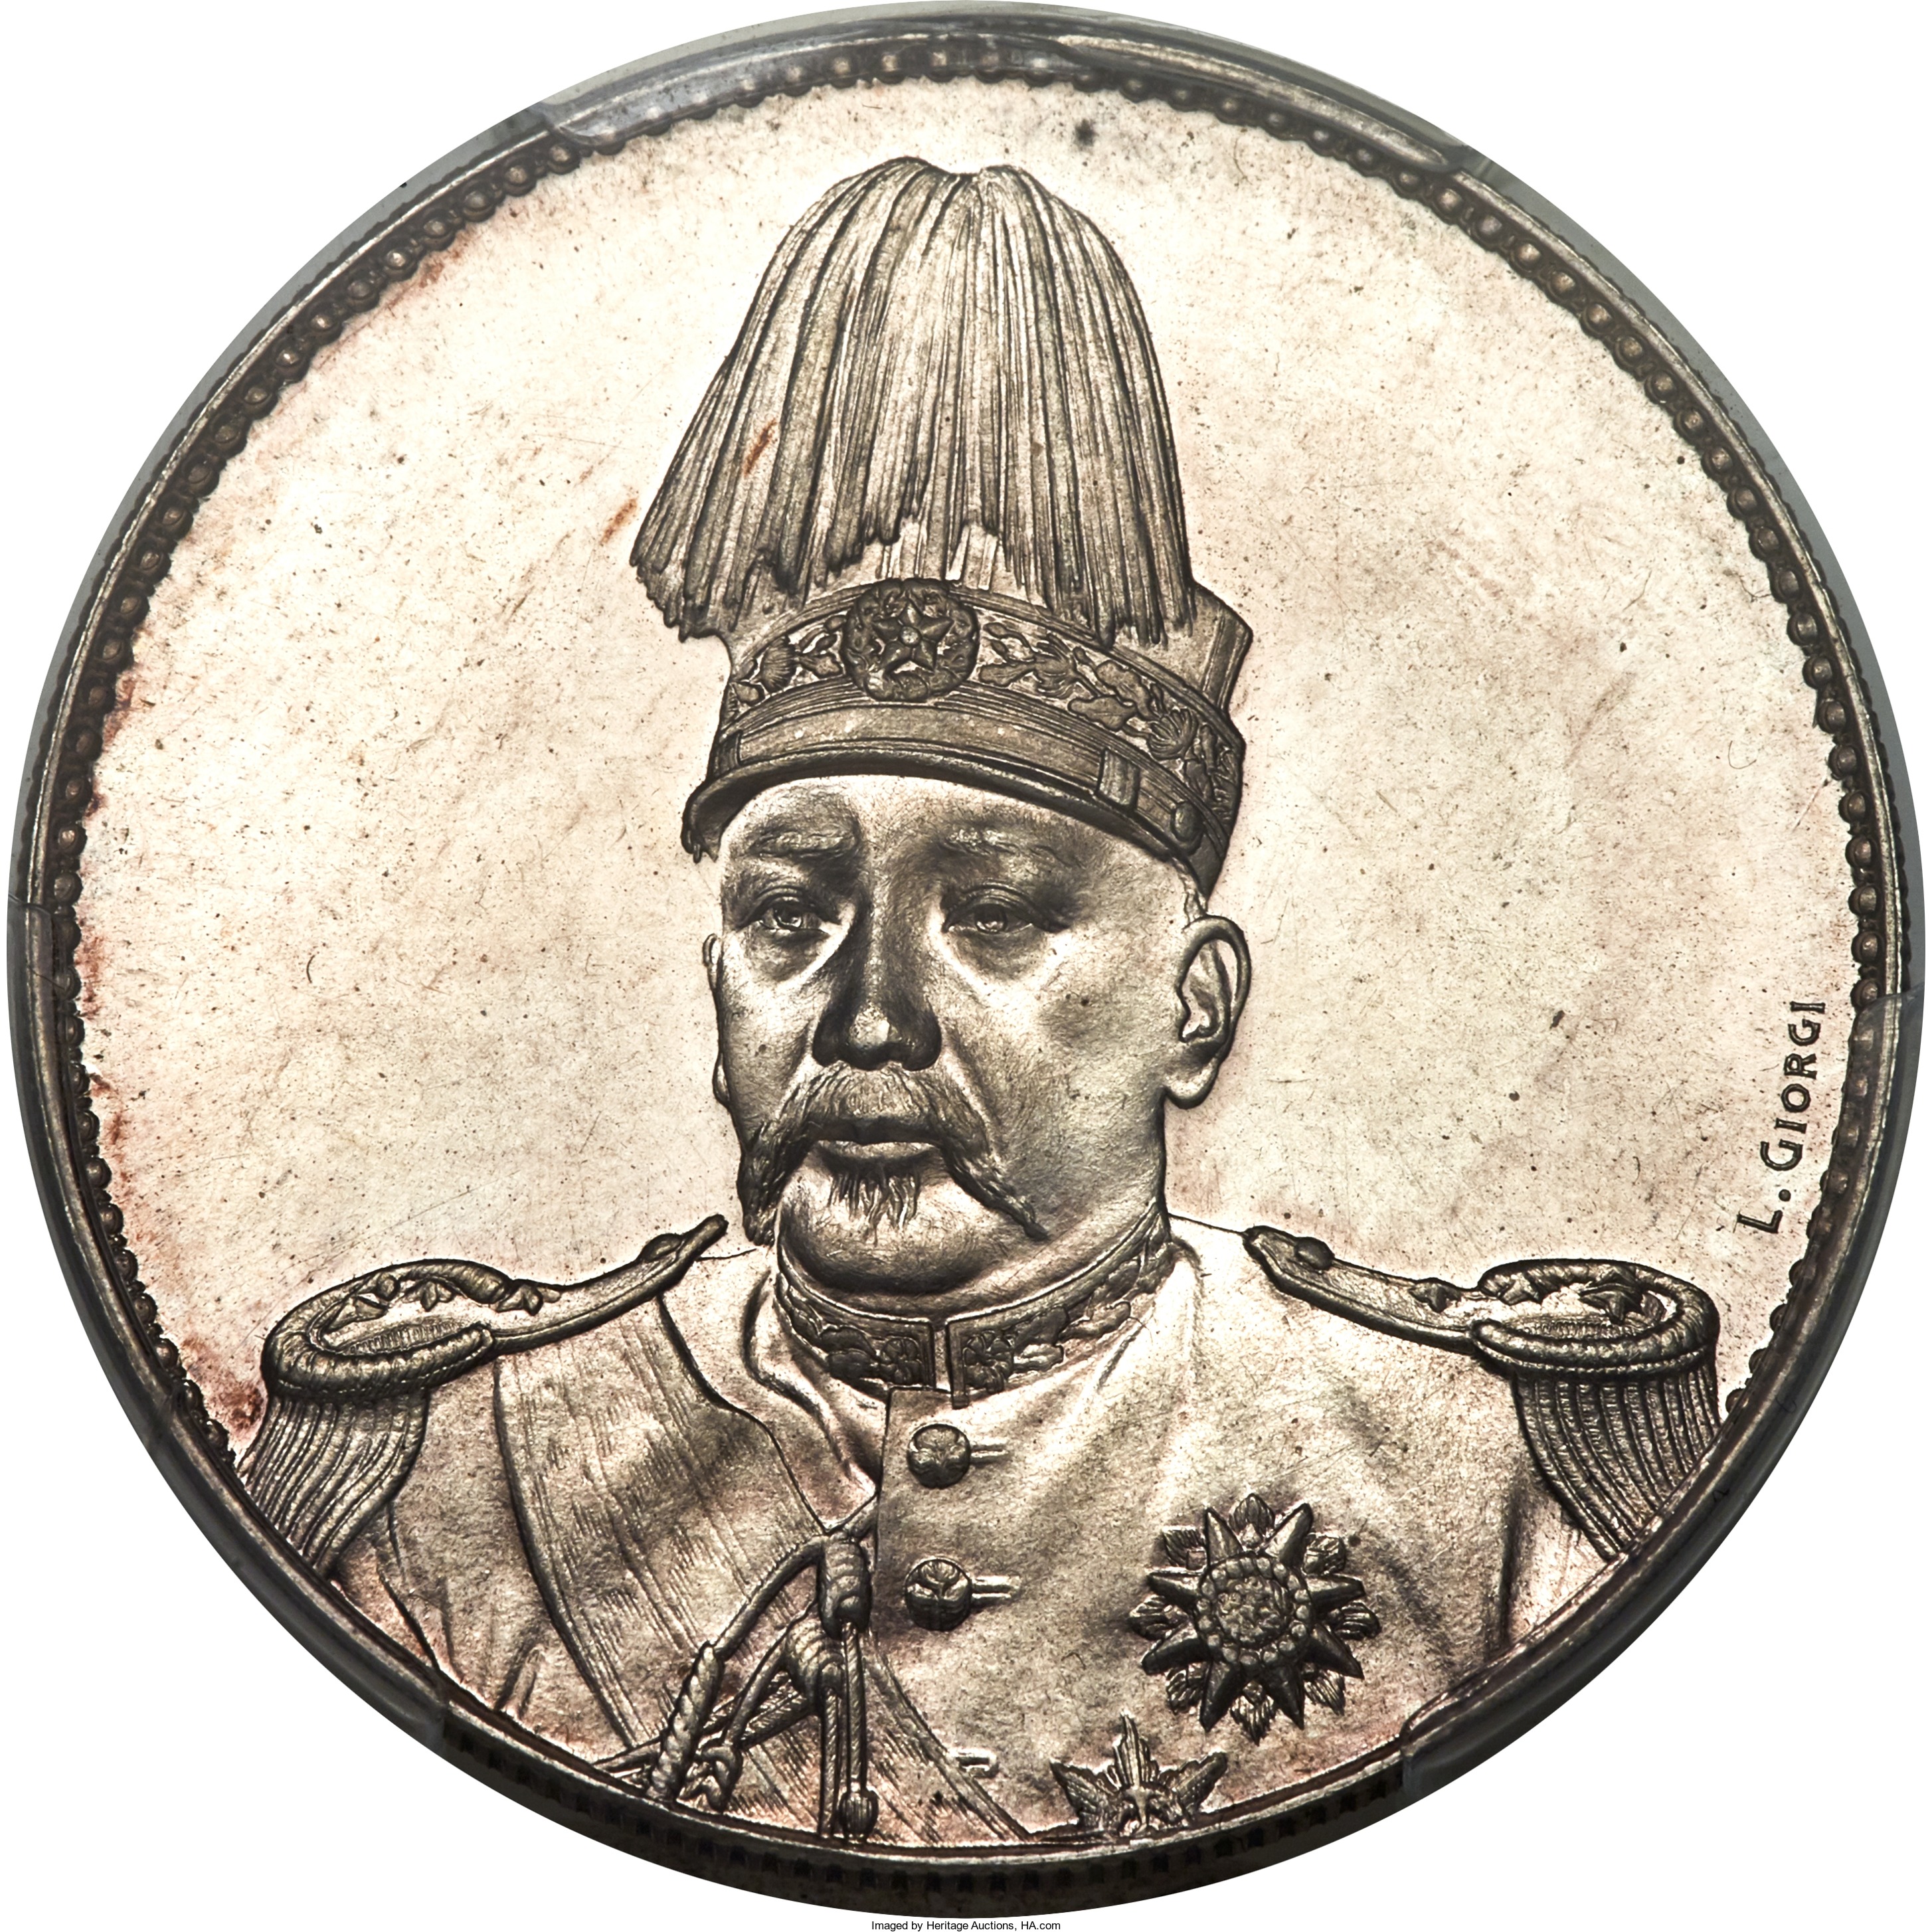 1914 Republic Yuan Shih-kai Silver "L. Giorgi" Pattern Specimen Dollar SP65 PCGS. Image courtesy Heritage Auctions